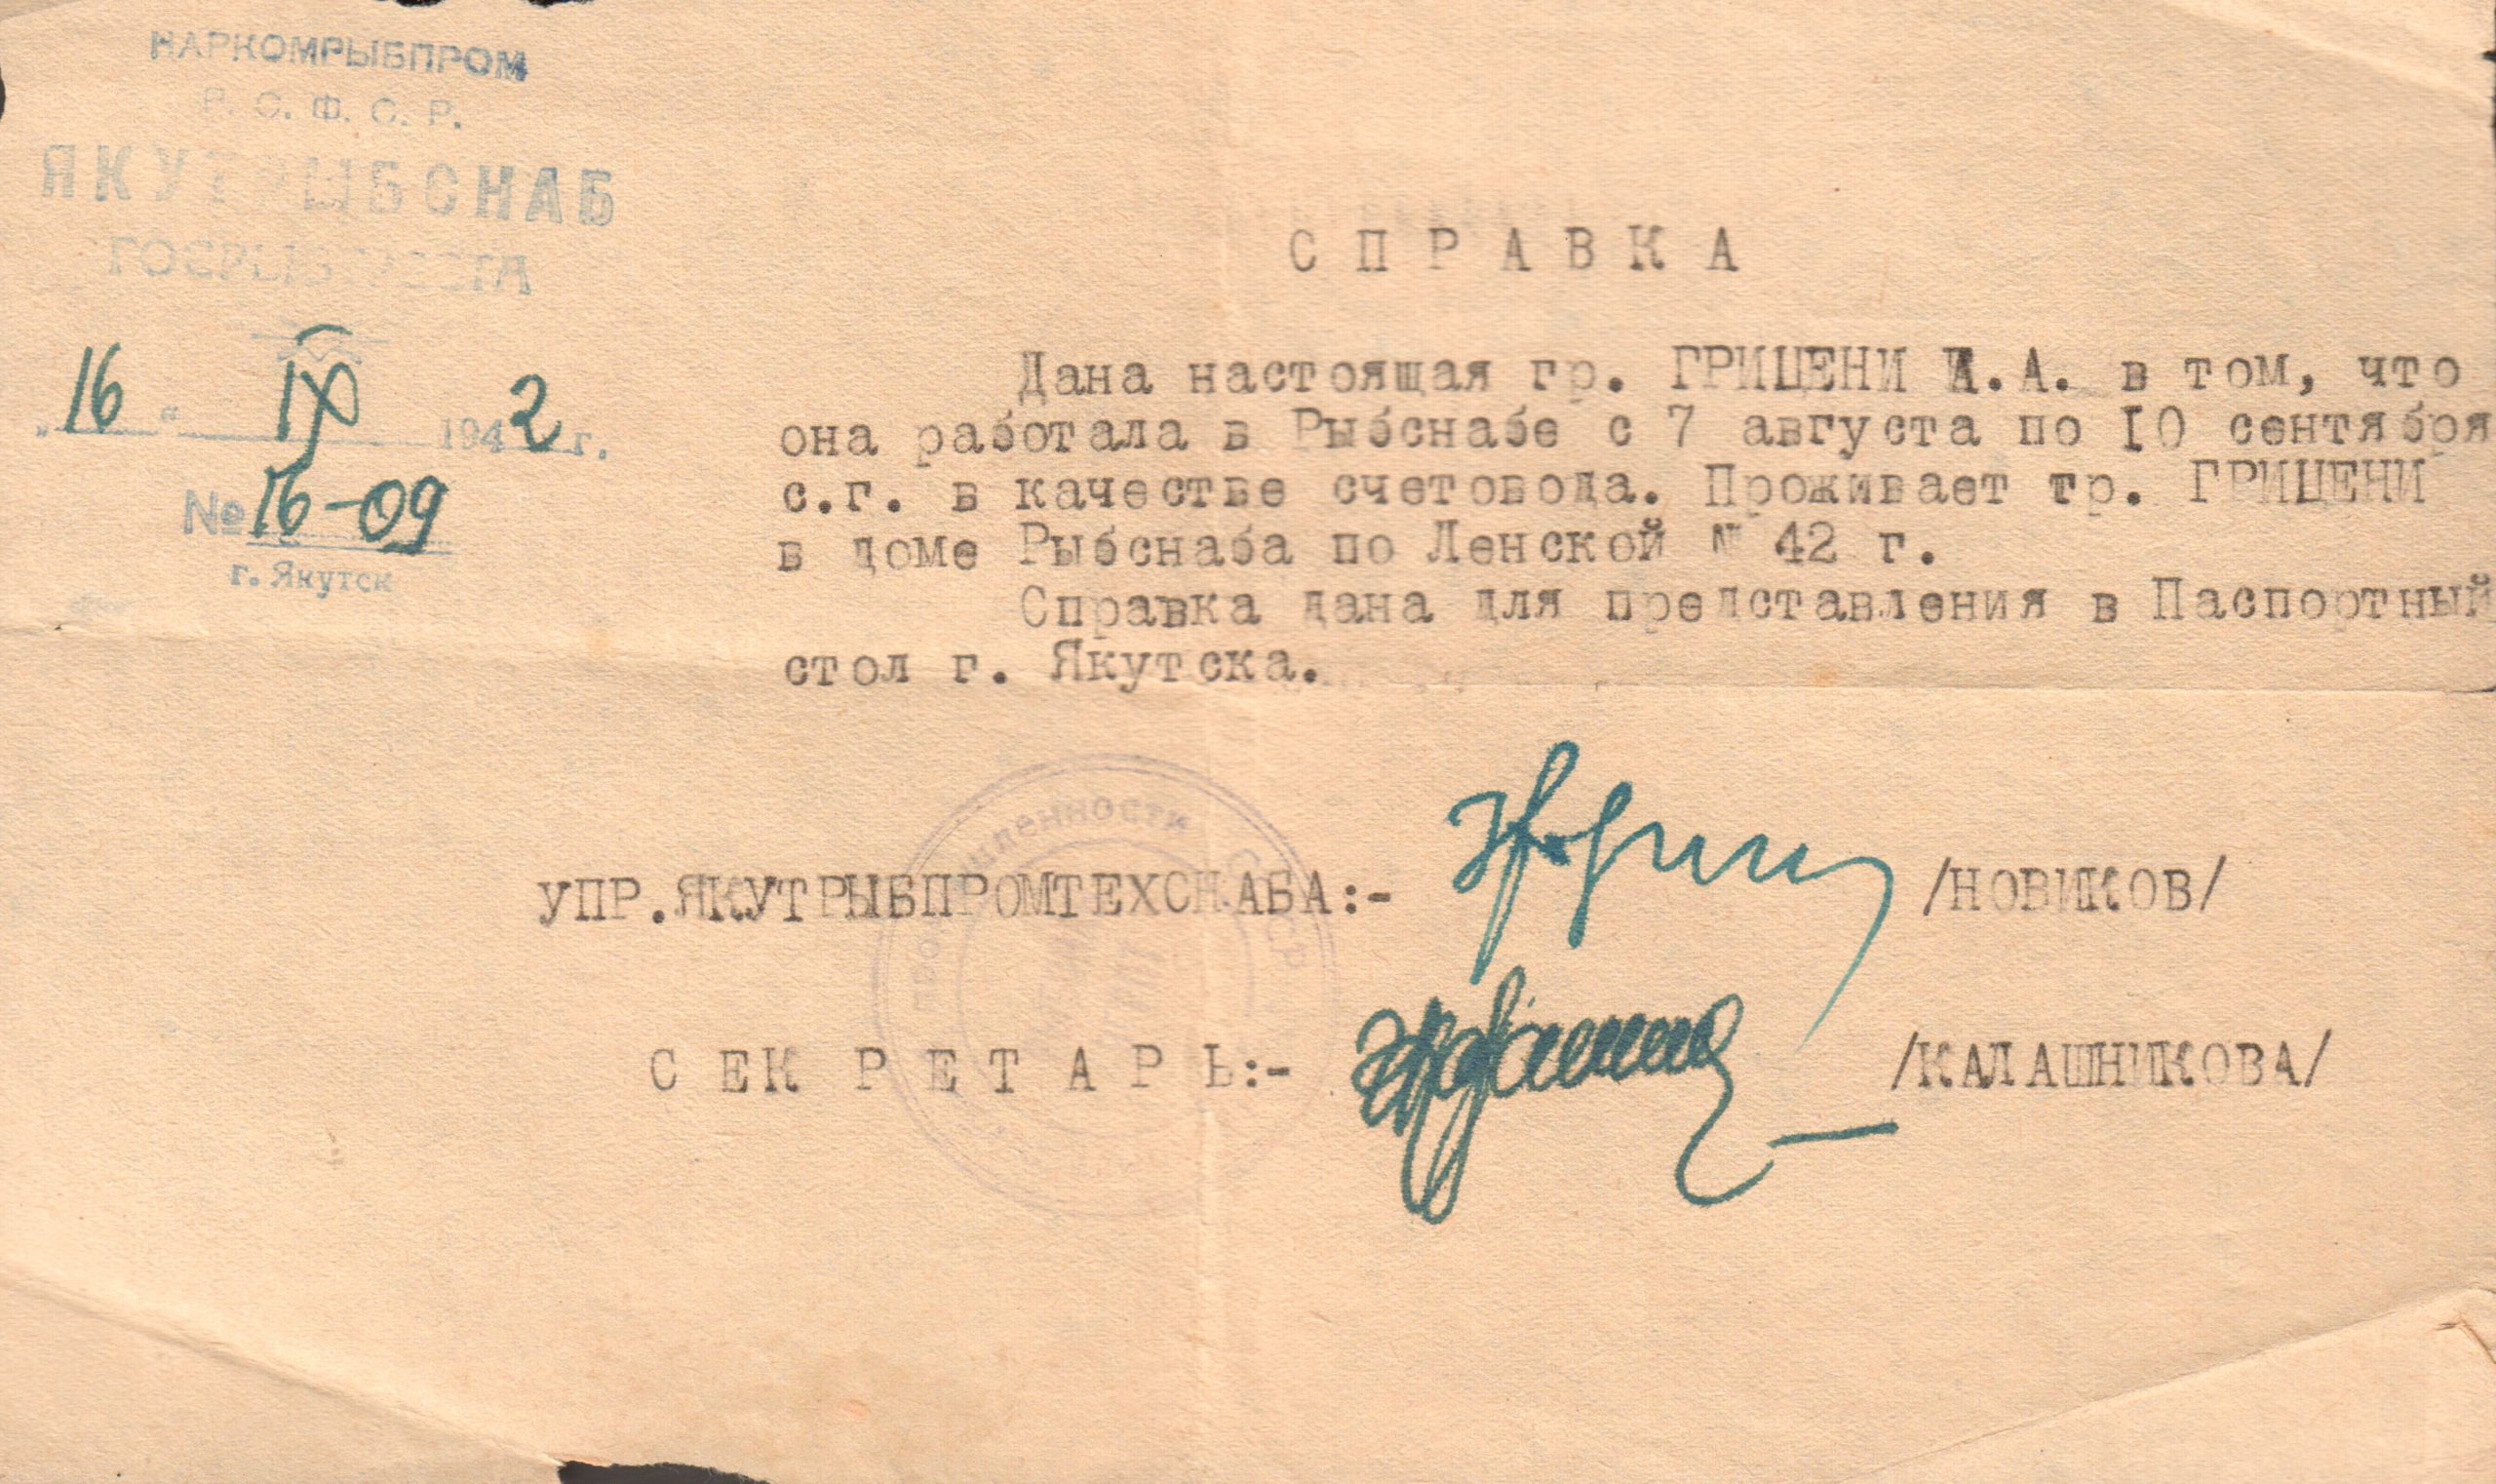 1942 m. rugsėjo 16 d. A. Gricienei išduota pažyma Nr. 16-09